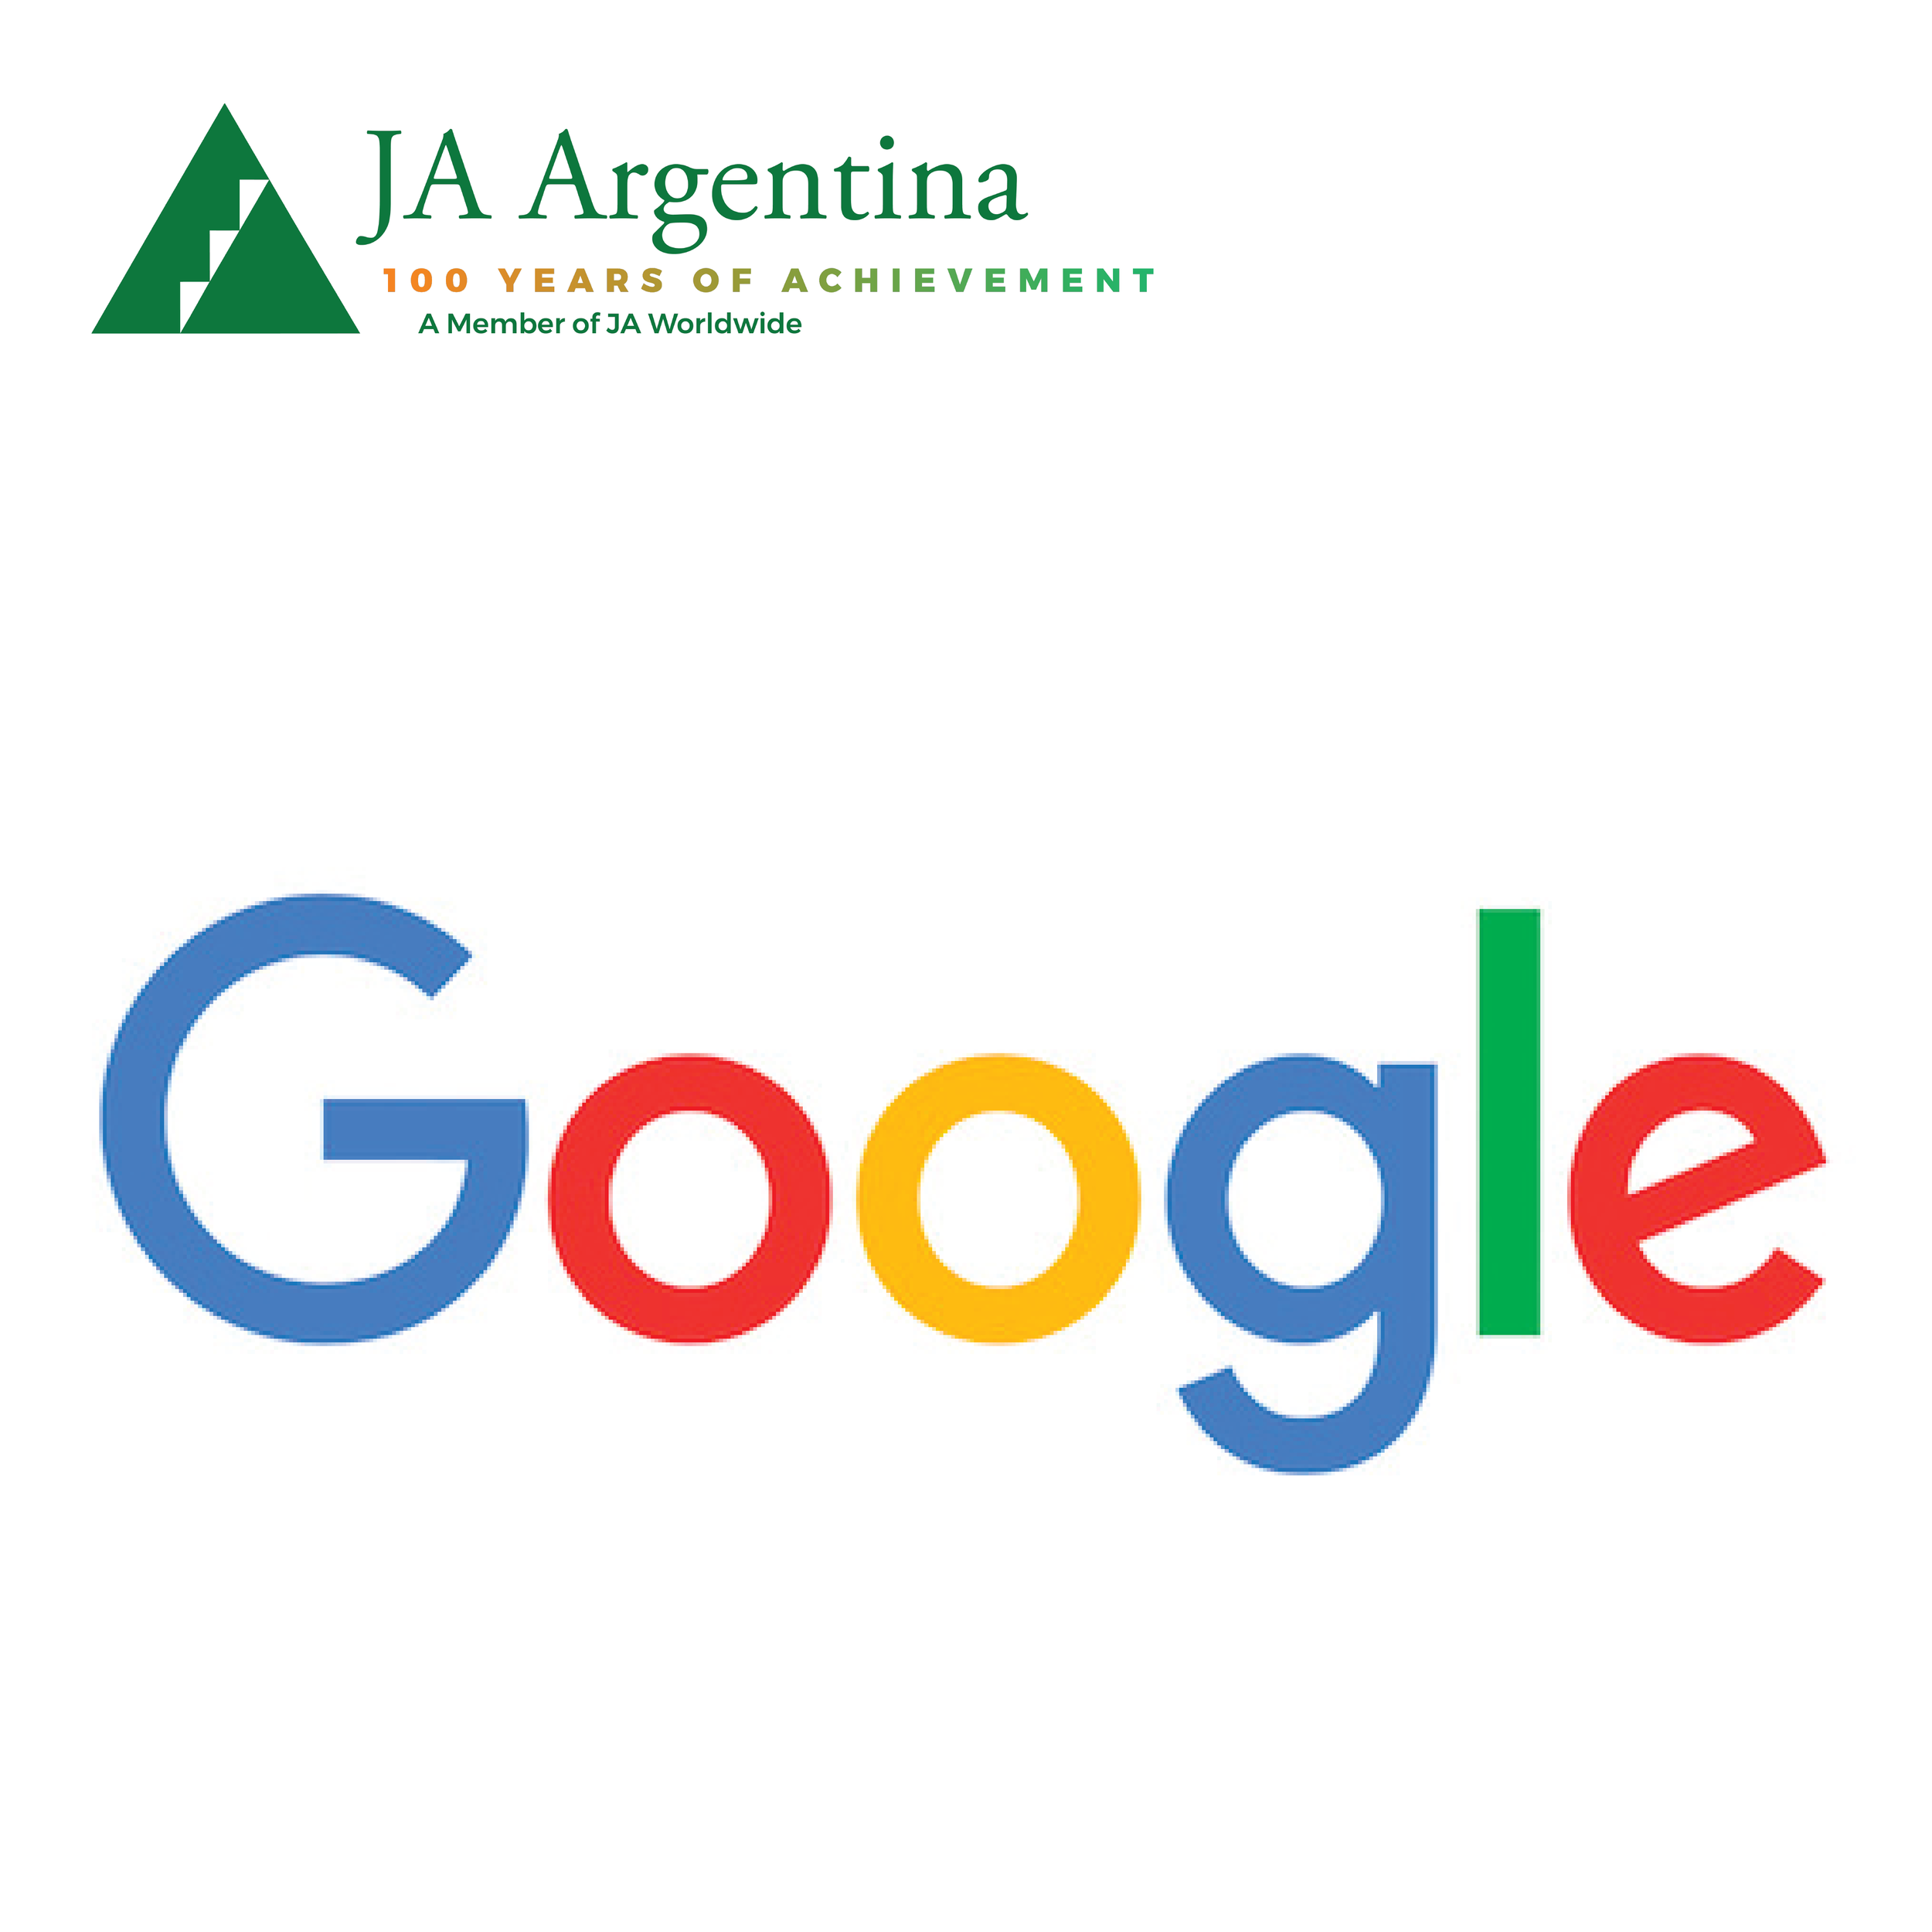 JA Argentina + Google Partnership